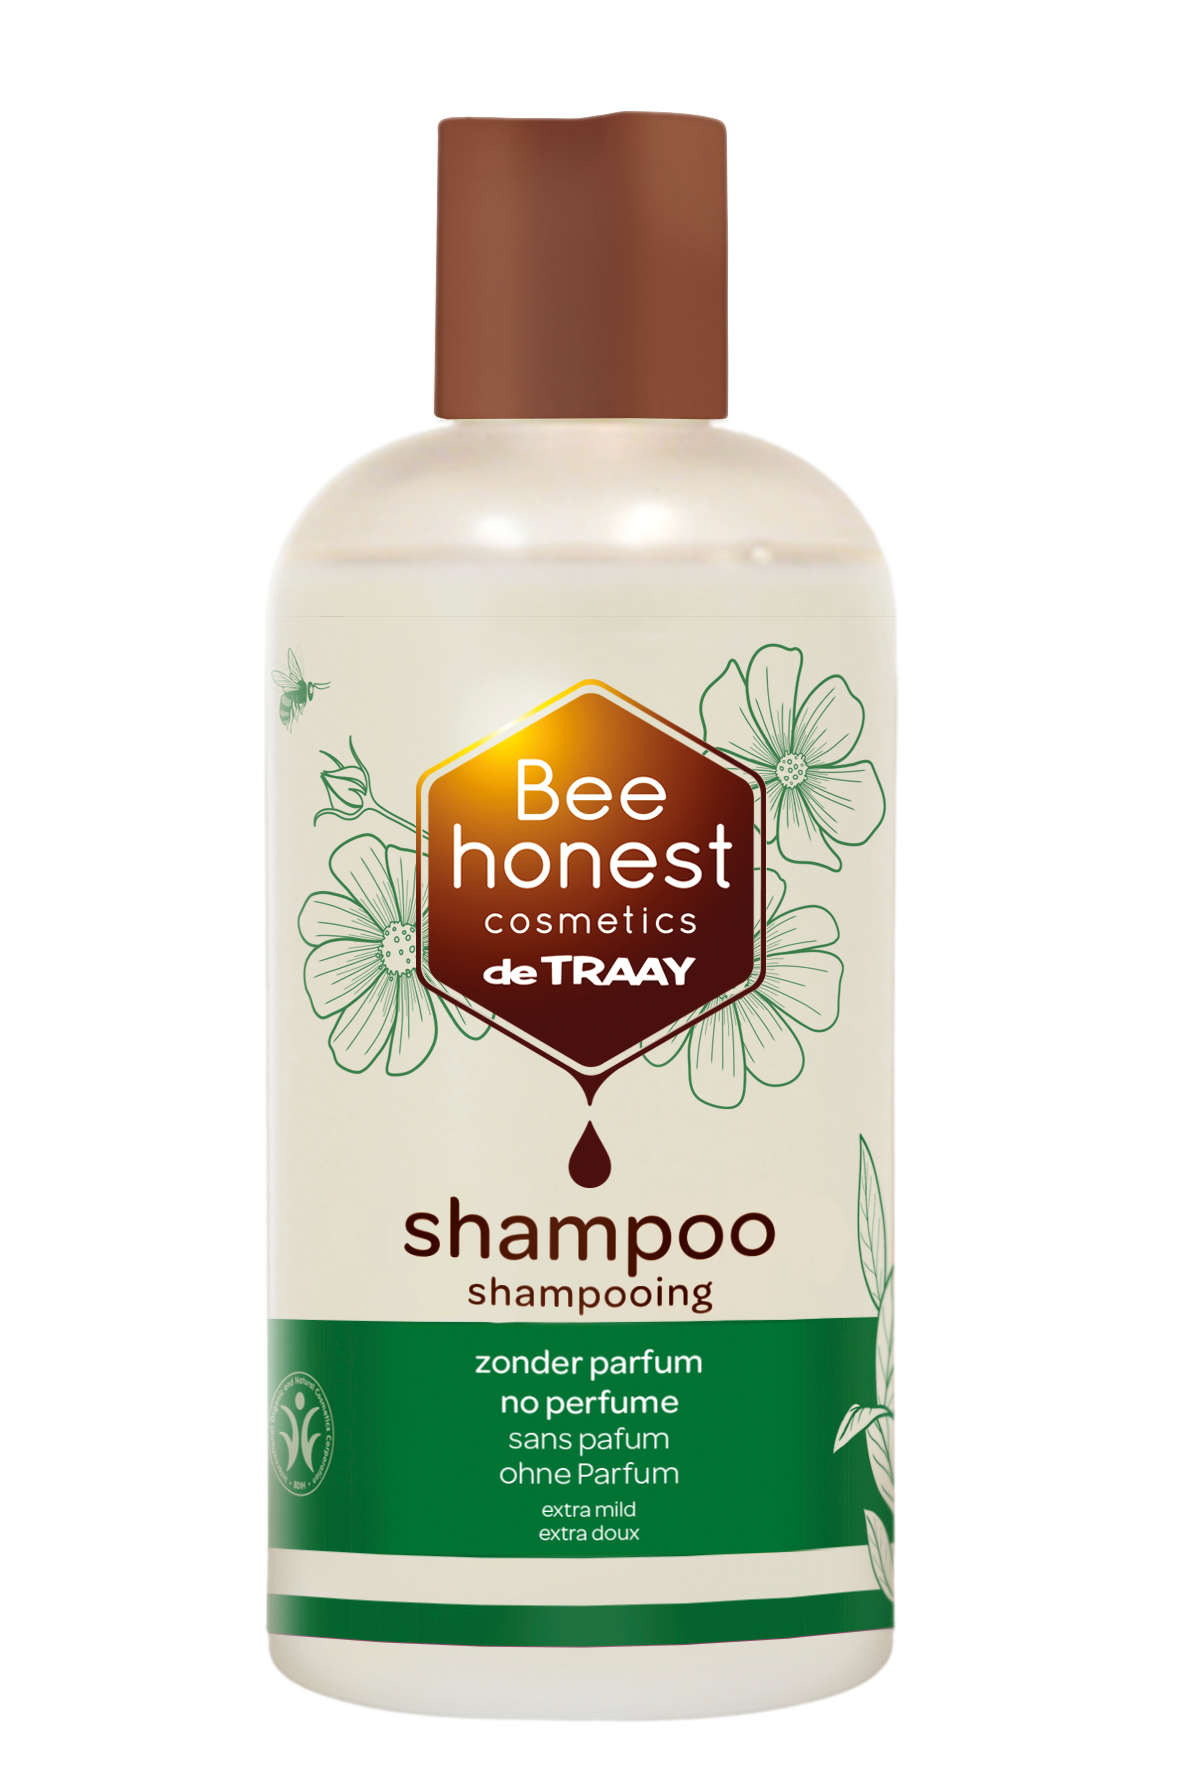 honest shampoo travel size